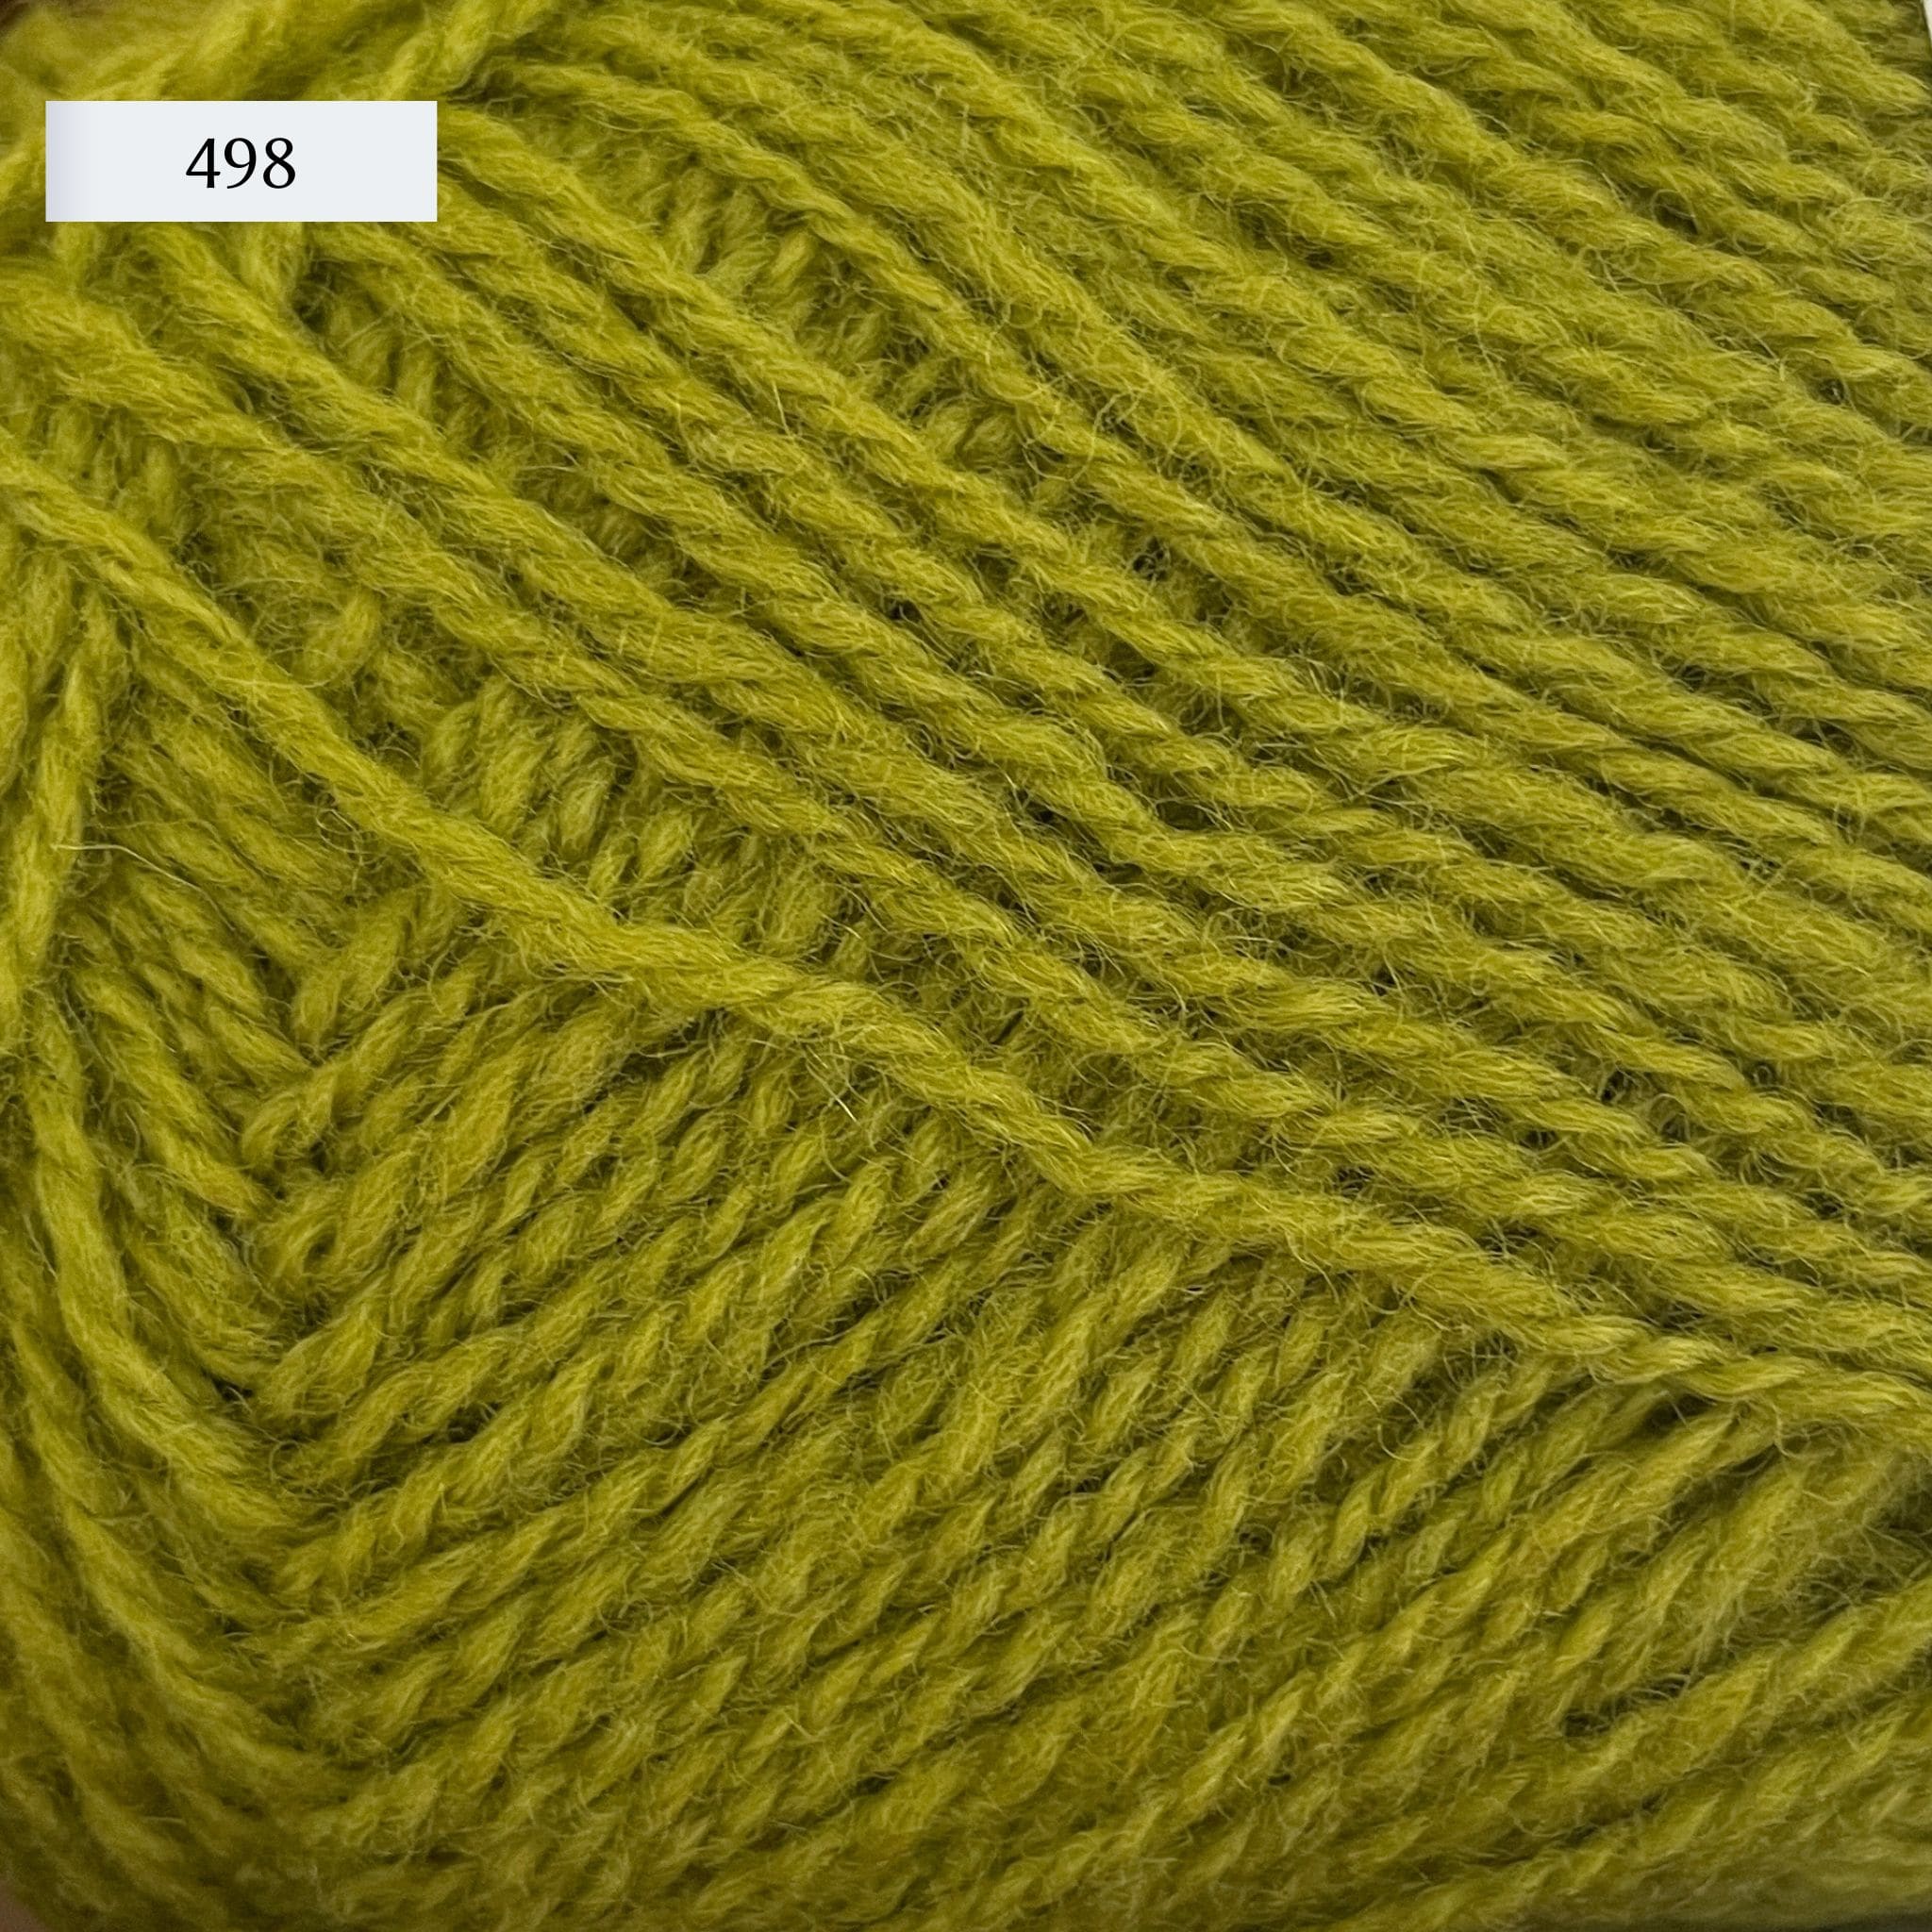 Rauma Finullgarn, a fingering/sport weight yarn, in color 498, a light frog green